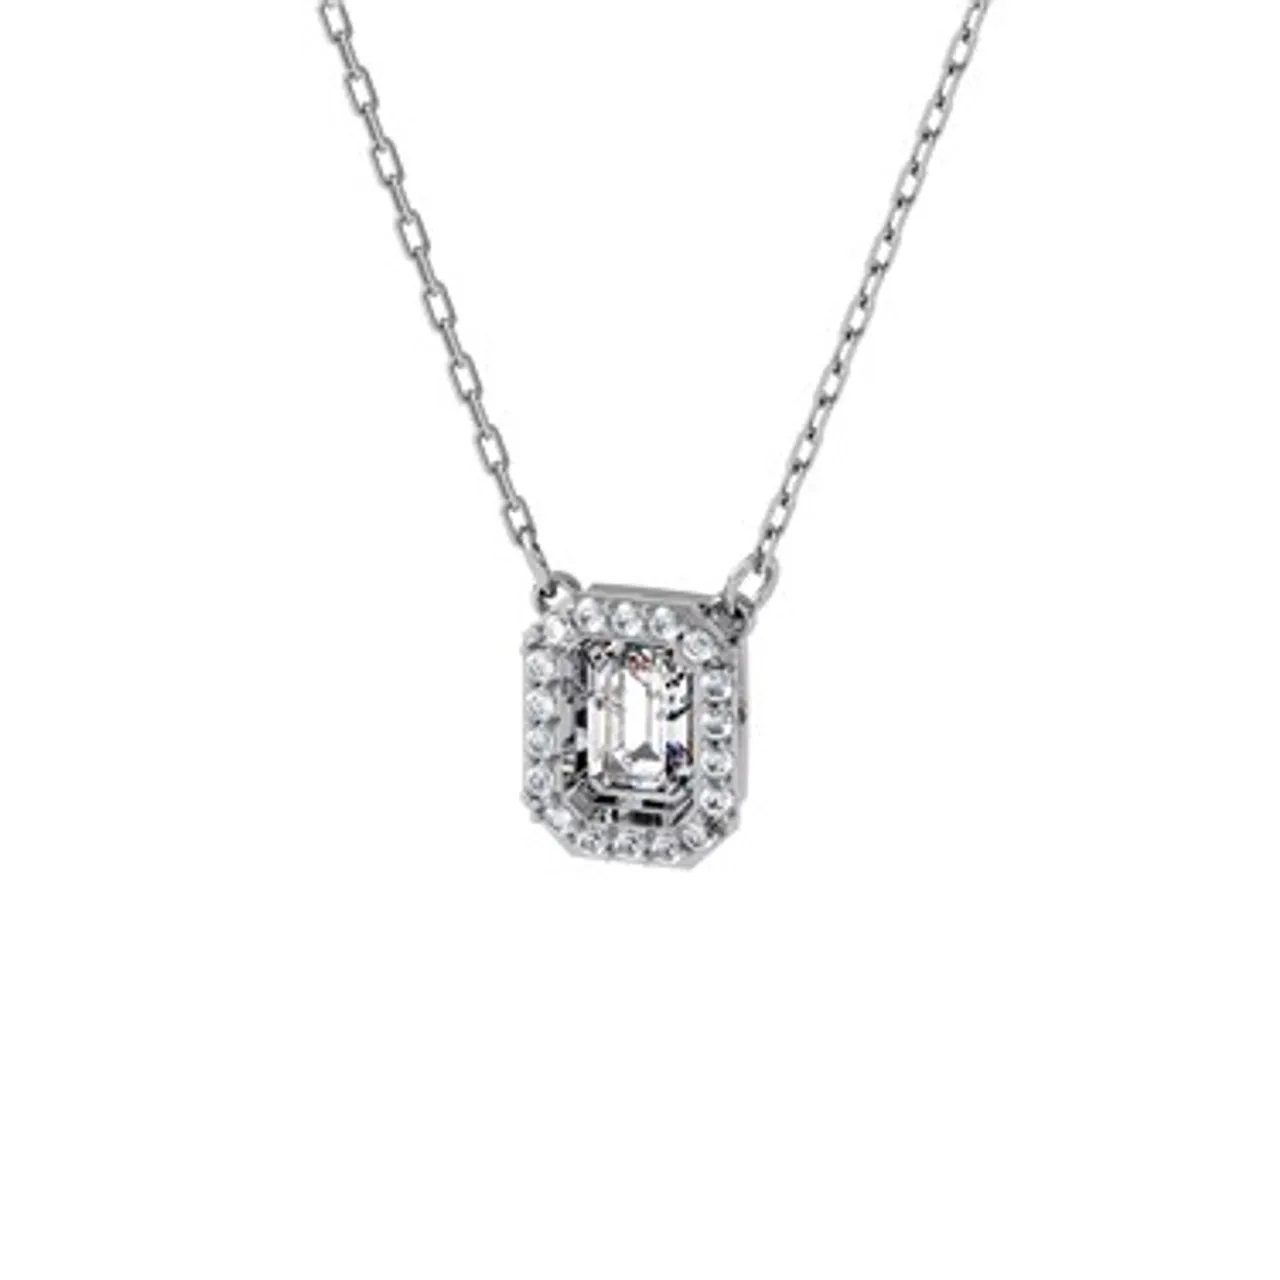 Swarovski Millenia Silver Sparkling Dance Necklace - Adjustable